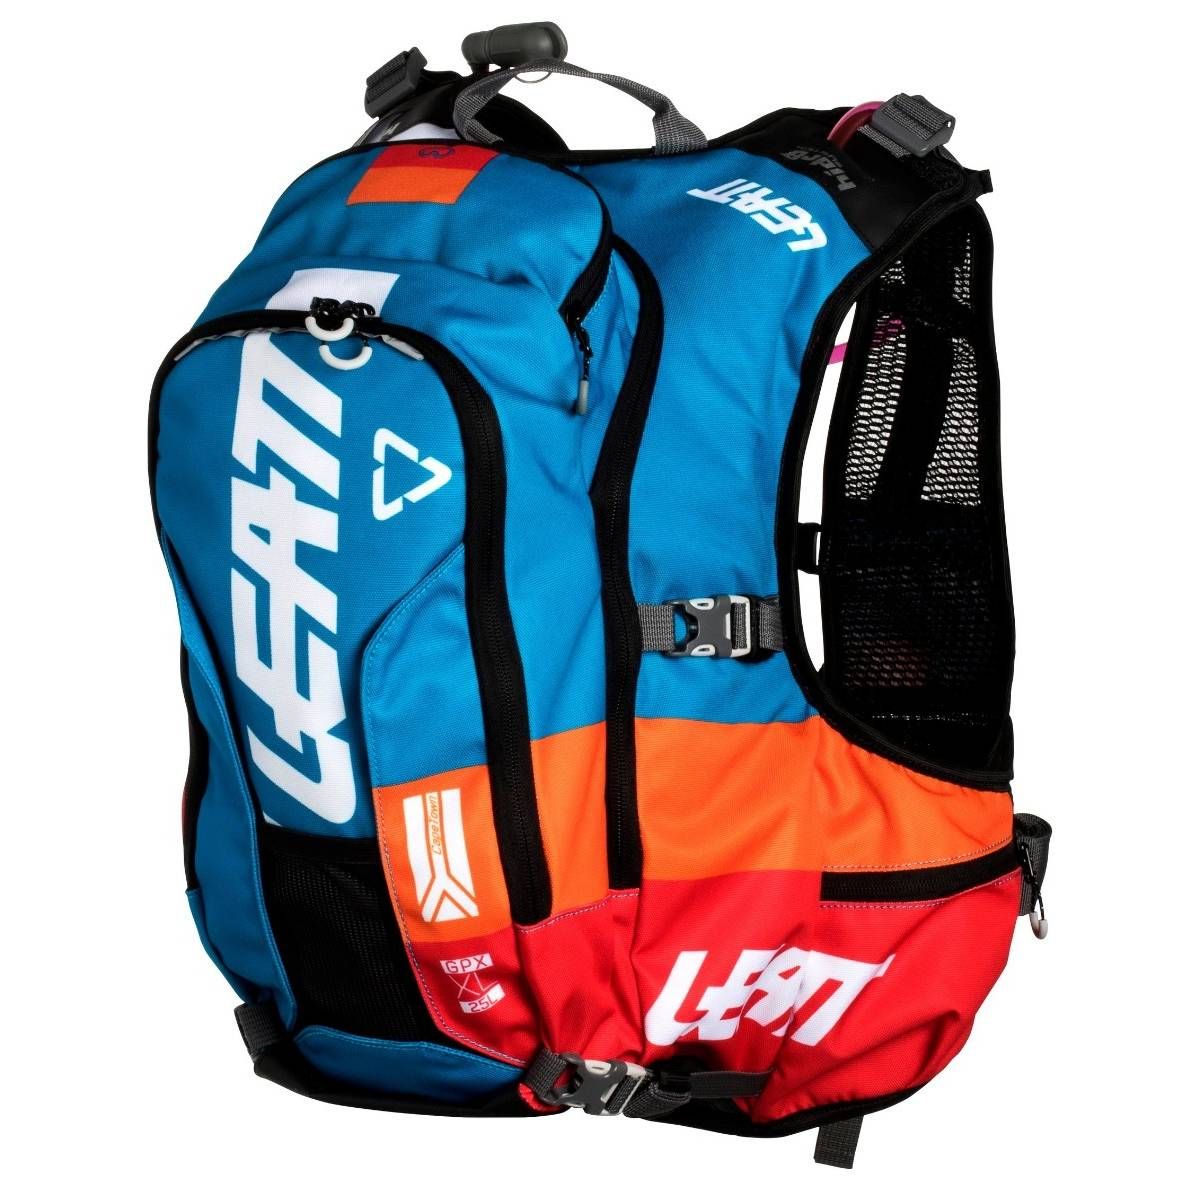 Leatt 2.0 XL DBX 2L Hydration Backpack 